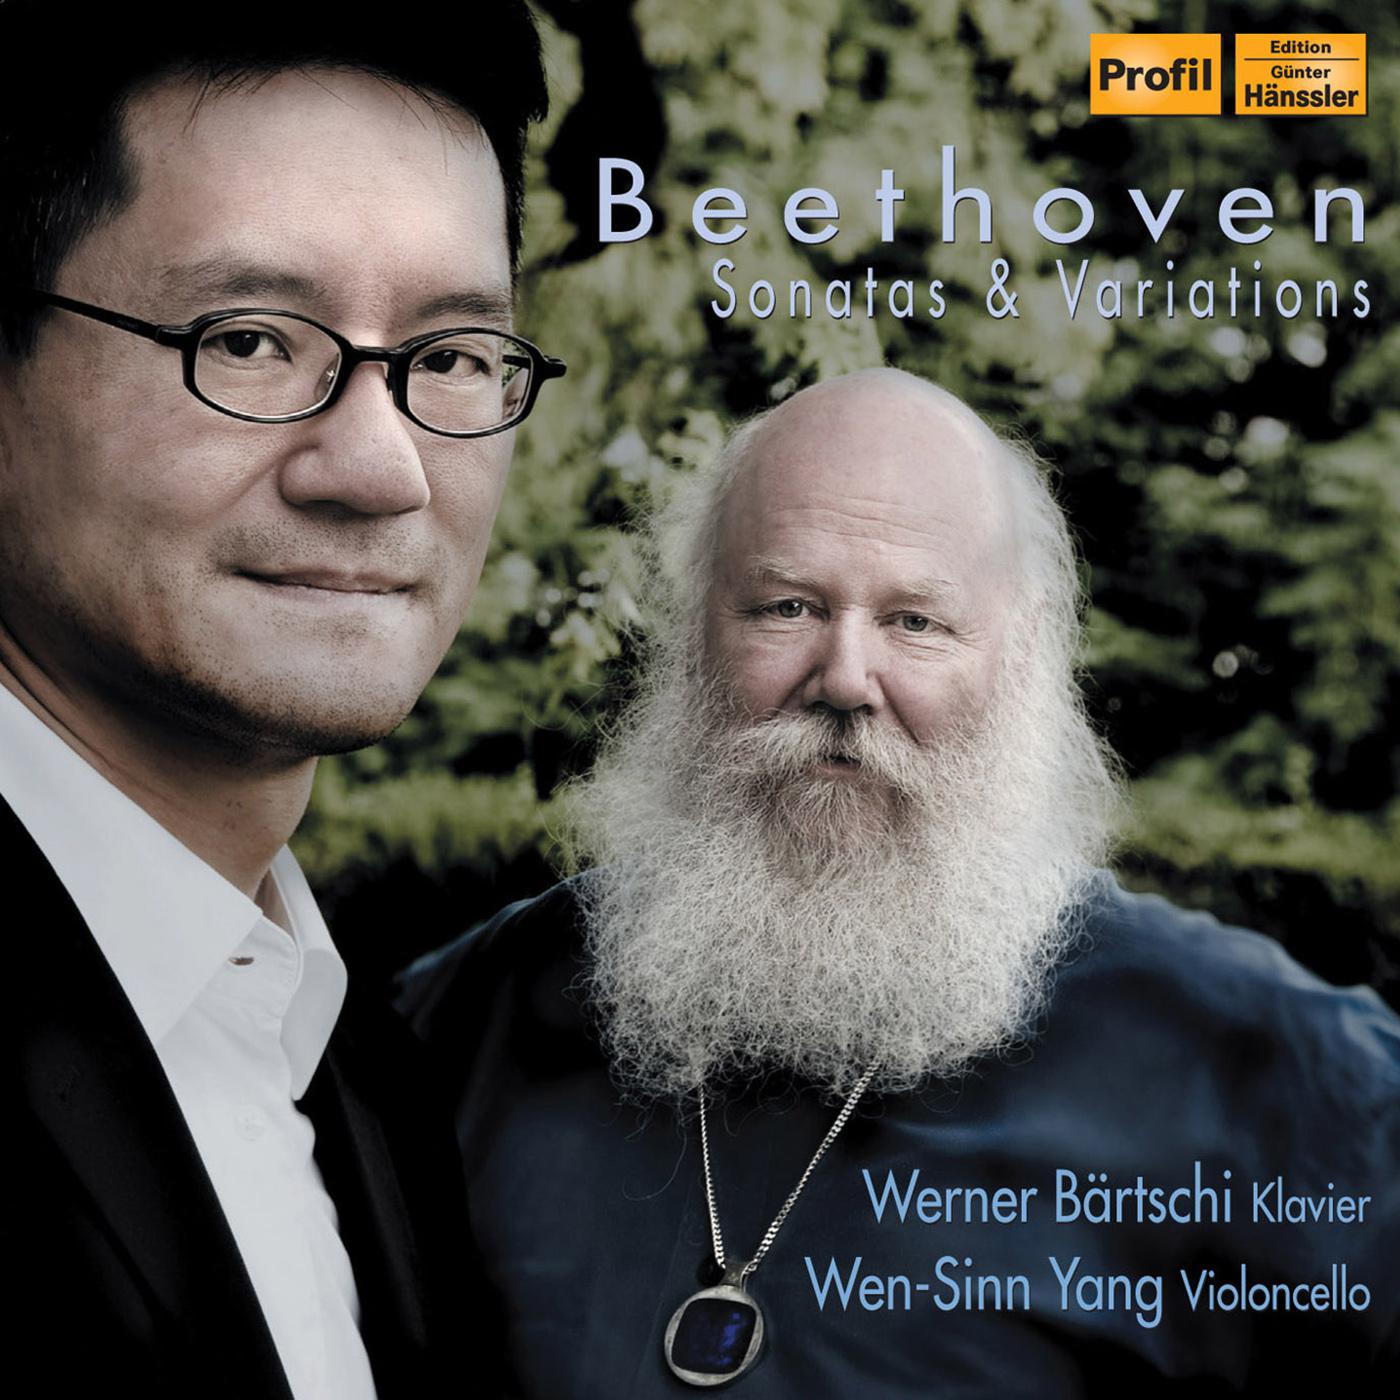 BEETHOVEN, L. van: Cello Sonatas Nos. 1 and 2 / Variations, Op. 66 and WoO 45 (Wen-Sinn Yang, Bartschi)